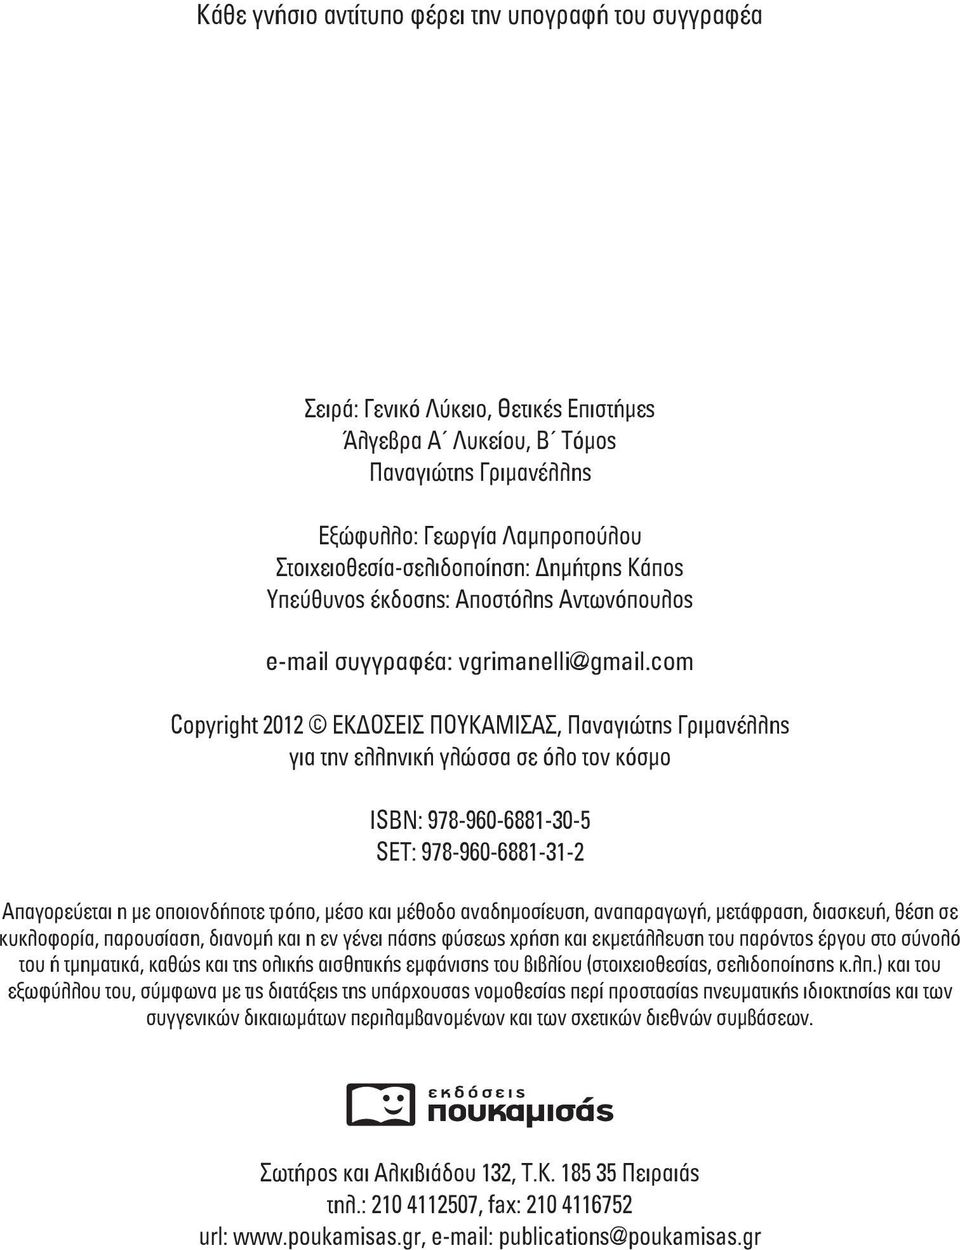 com Copyright 2012 ΕΚΔΟΕΙ ΠΟΥΚΑΜΙΑ, Παναγιώτης Γριμανέλλης για την ελληνική γλώσσα σε όλο τον κόσμο ISBN: 978-960-6881-0-5 SET: 978-960-6881-1-2 Απαγορεύεται η με οποιονδήποτε τρόπο, μέσο και μέθοδο